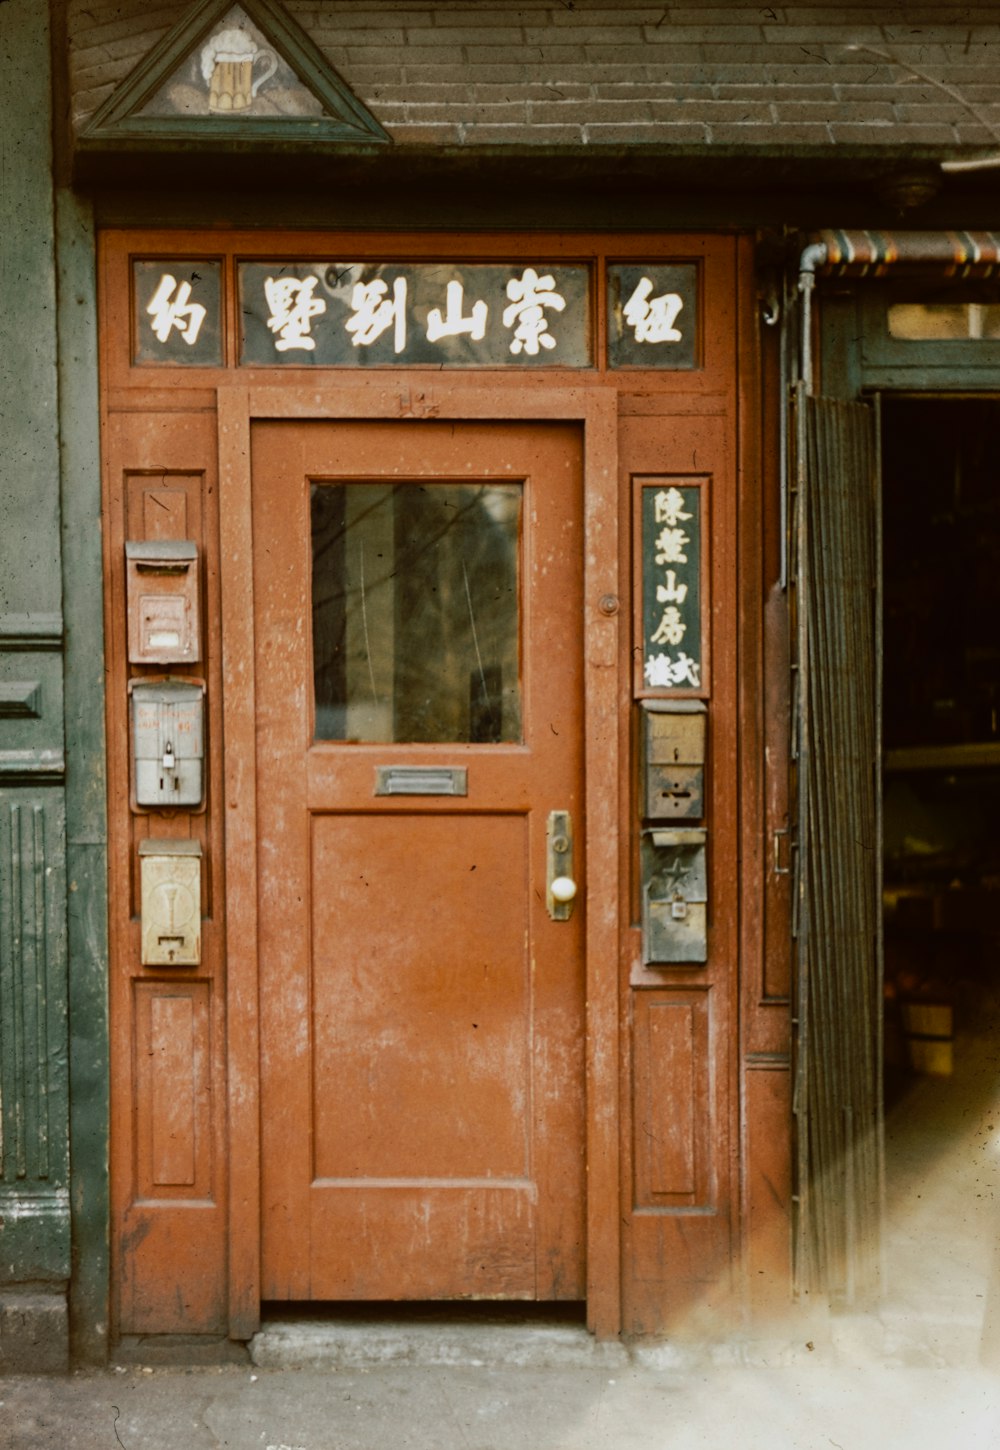 Une porte rouge avec une écriture asiatique dessus